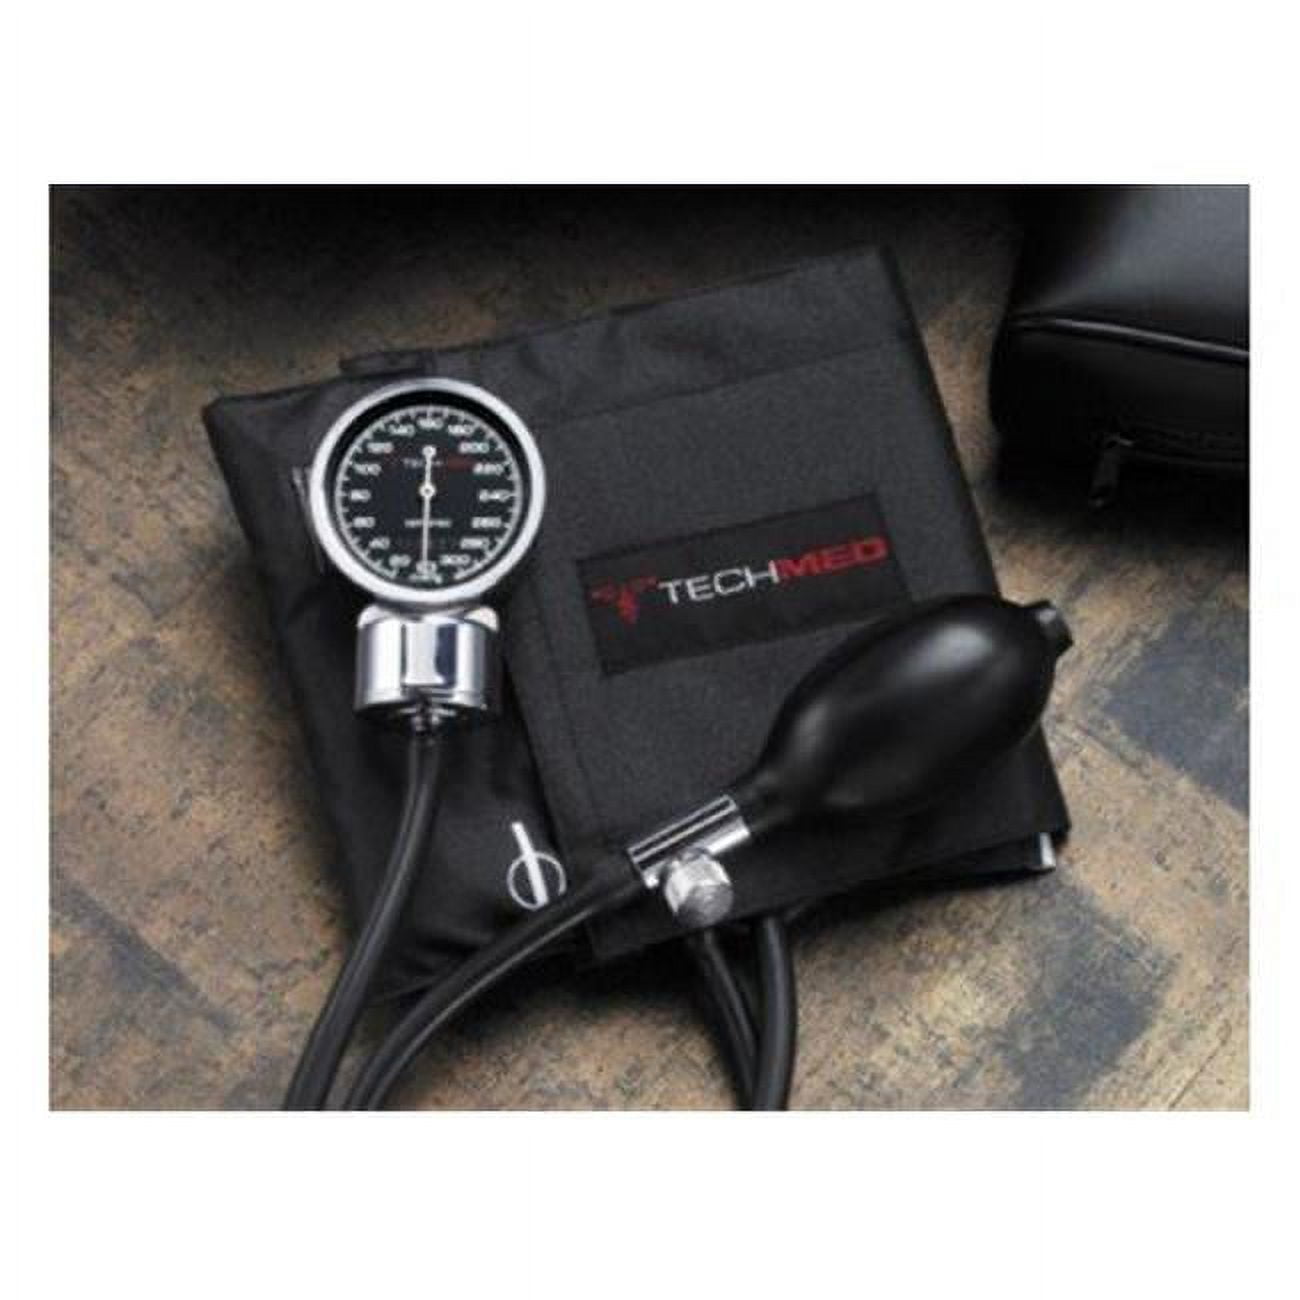 Picture of Tech Med 2010 Deluxe Nylon Sphygmomanometer, Black - Adult